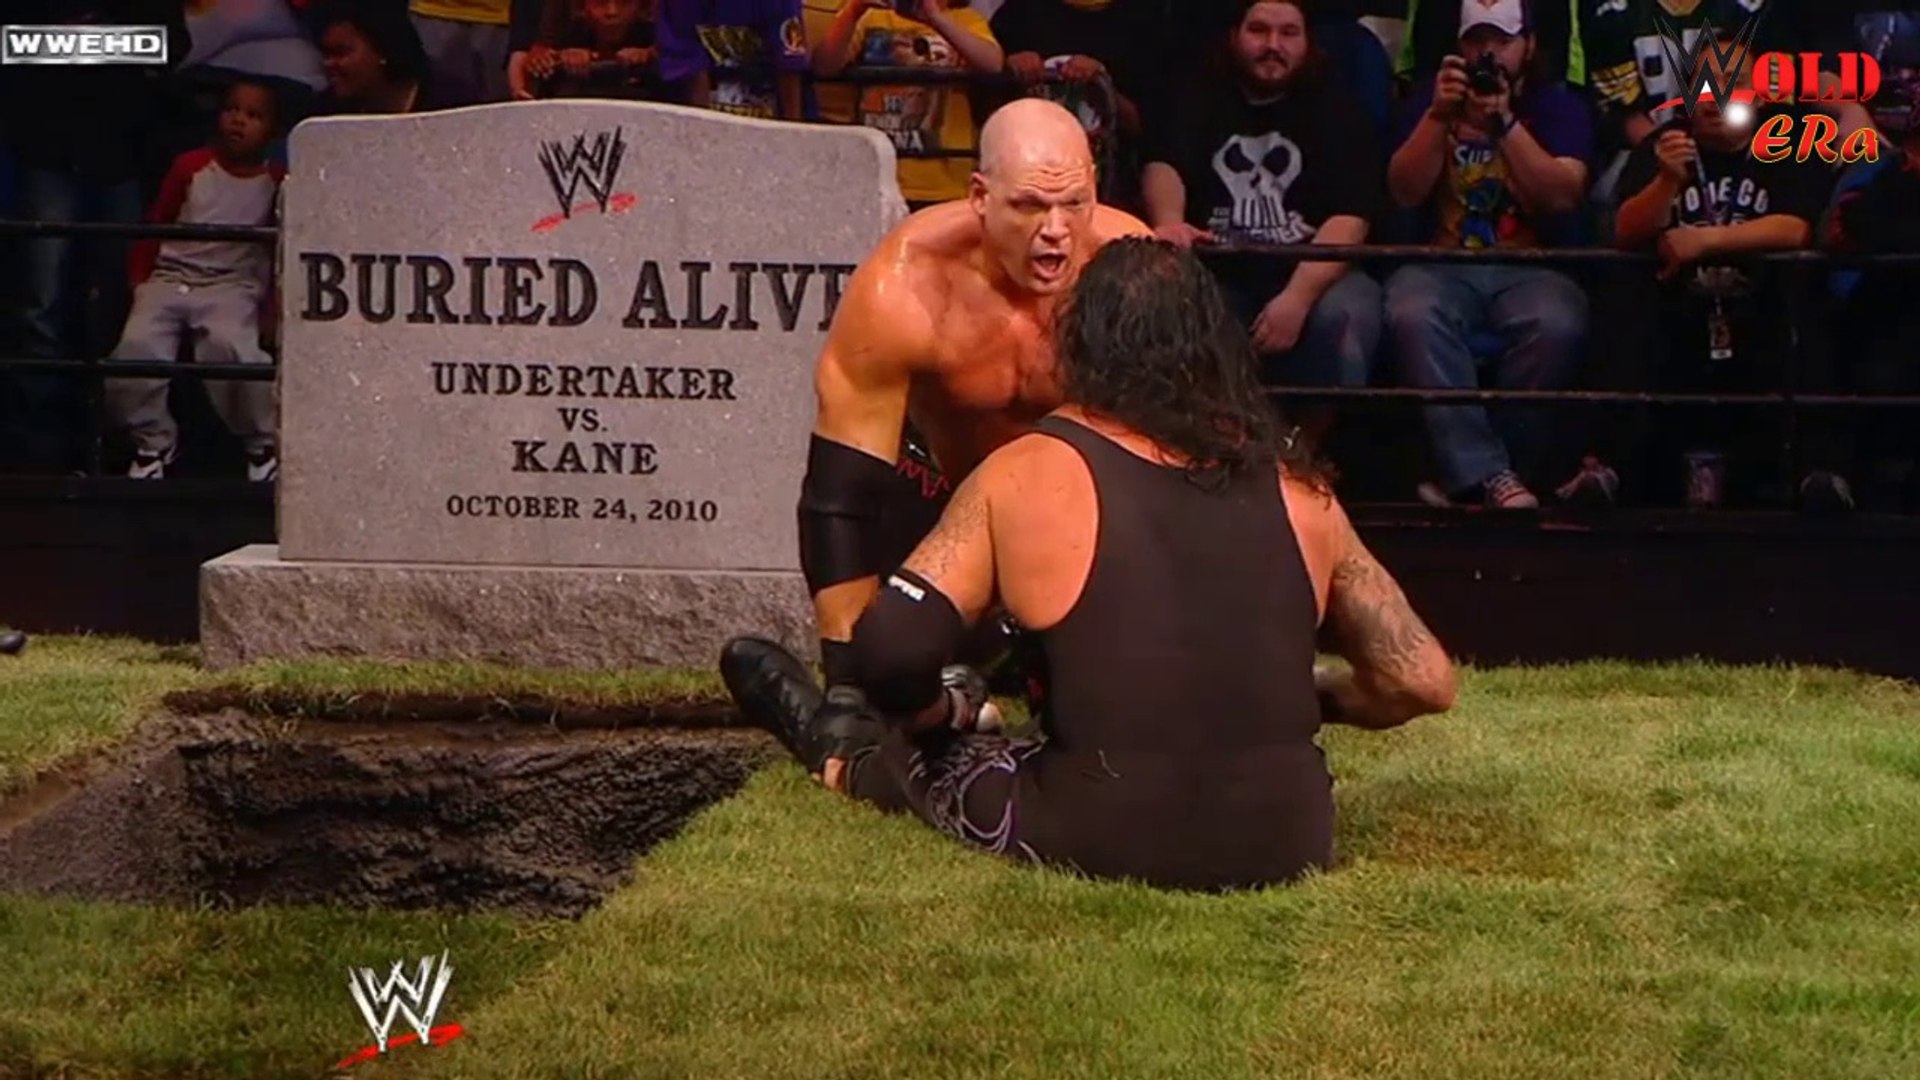 Buried alive match undertaker vs kane